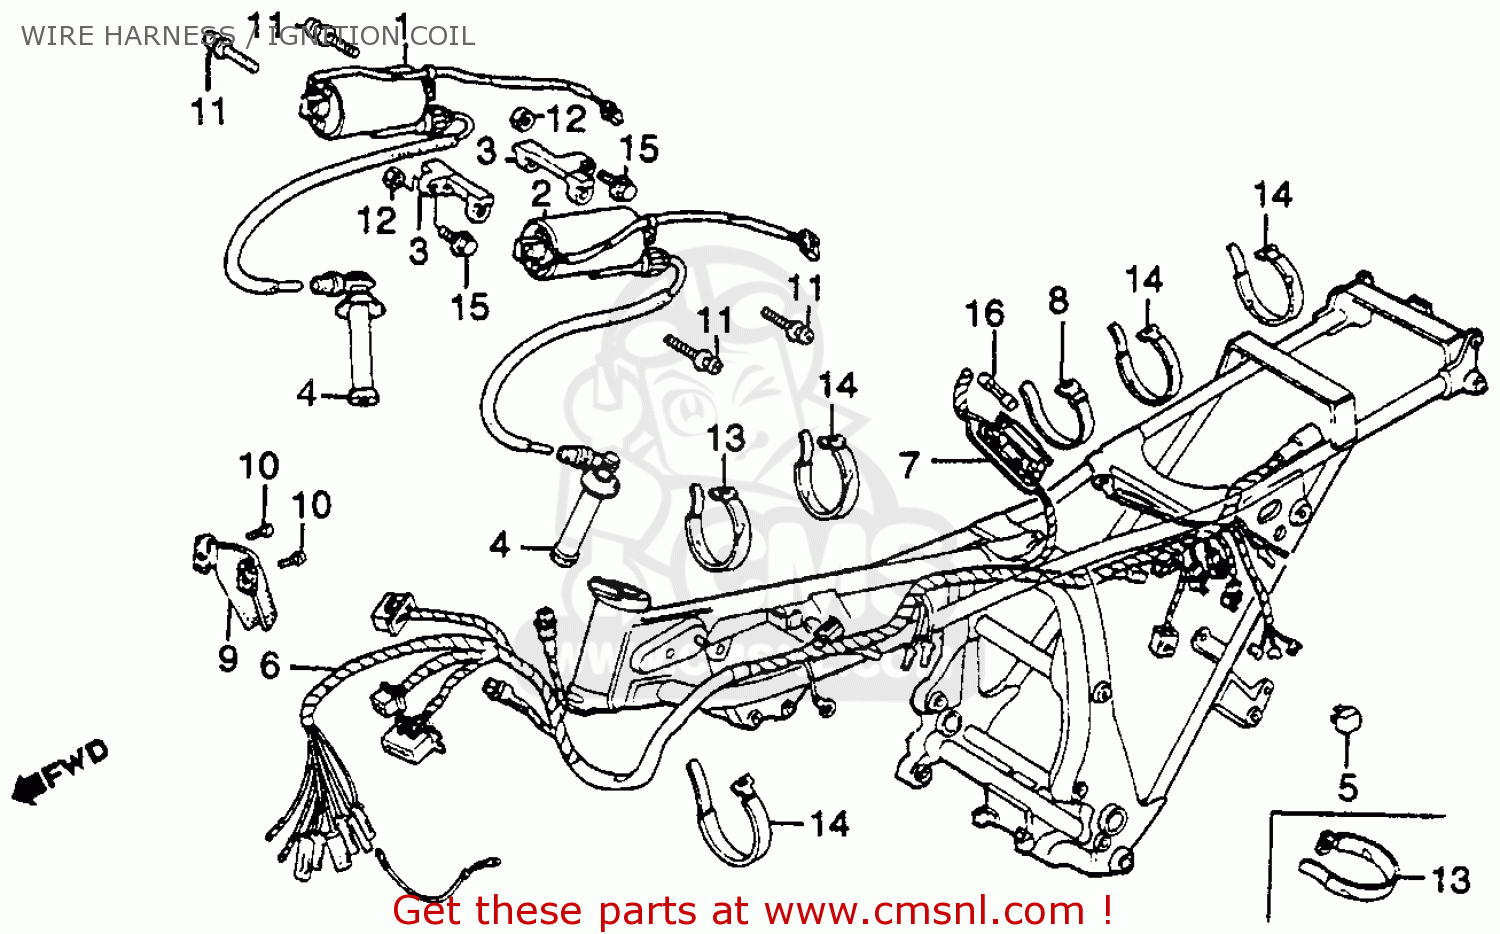 Honda silverwing electrical diagram #2